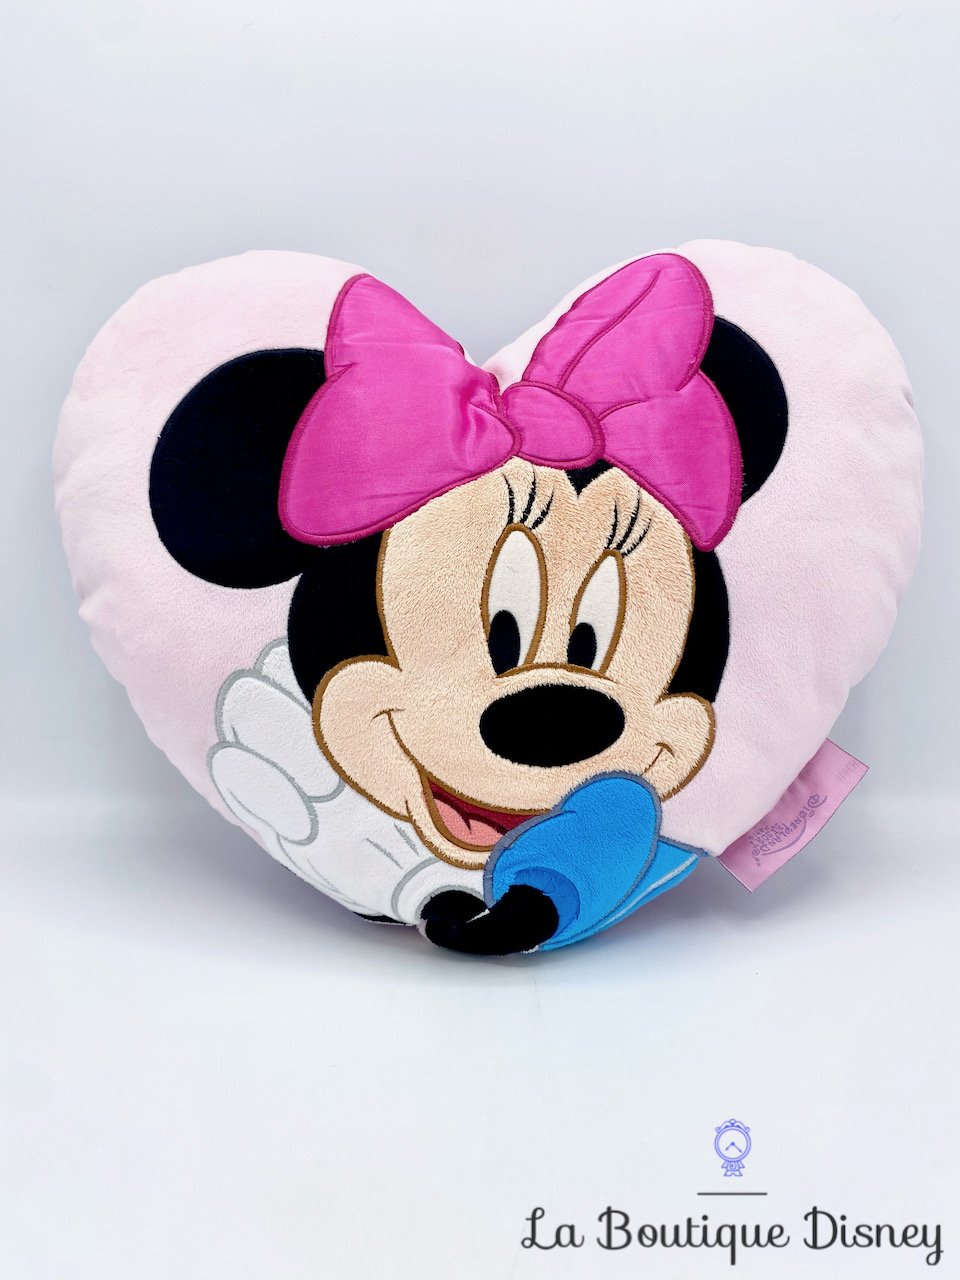 Coussin Minnie Mouse coeur rose Disneyland Paris Disney Charming